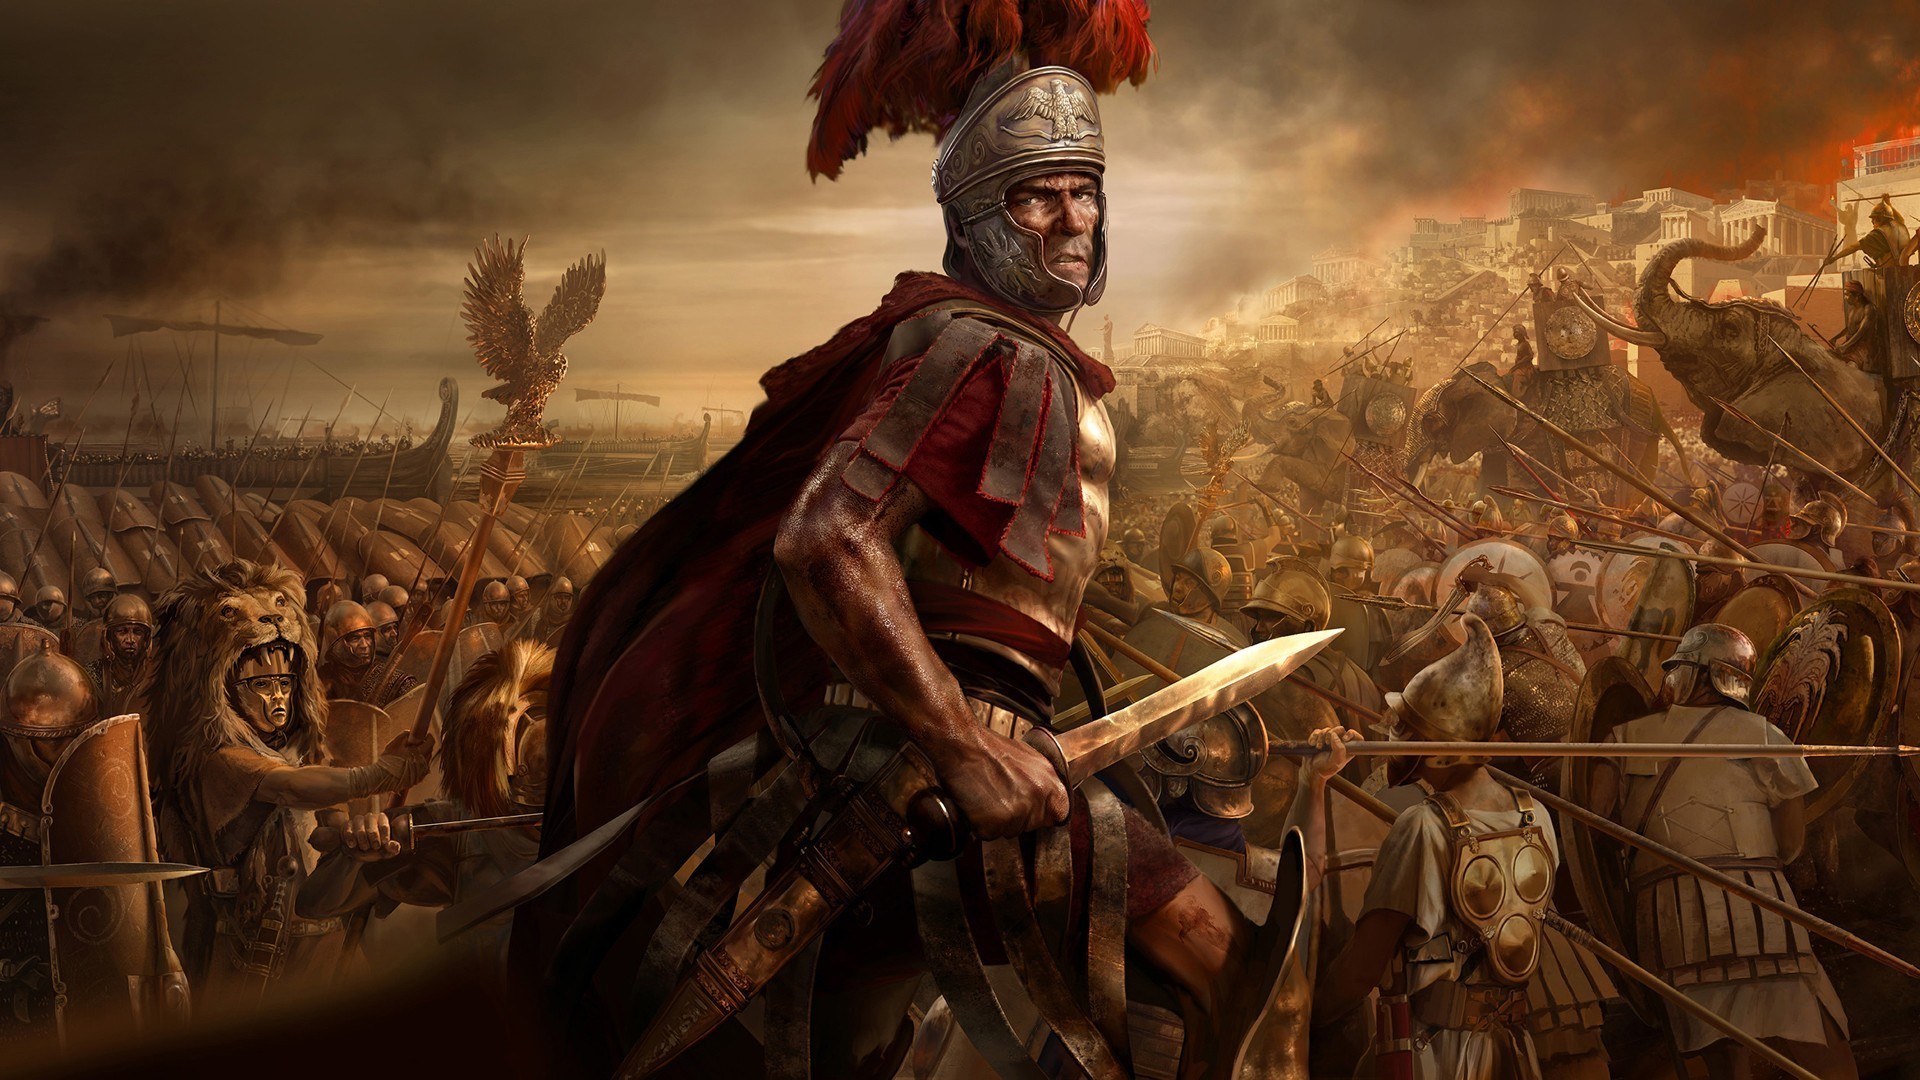 1920x1080 Rome 2 Roman Soldier Sword warrior warriors fantasy battle wallpaper  